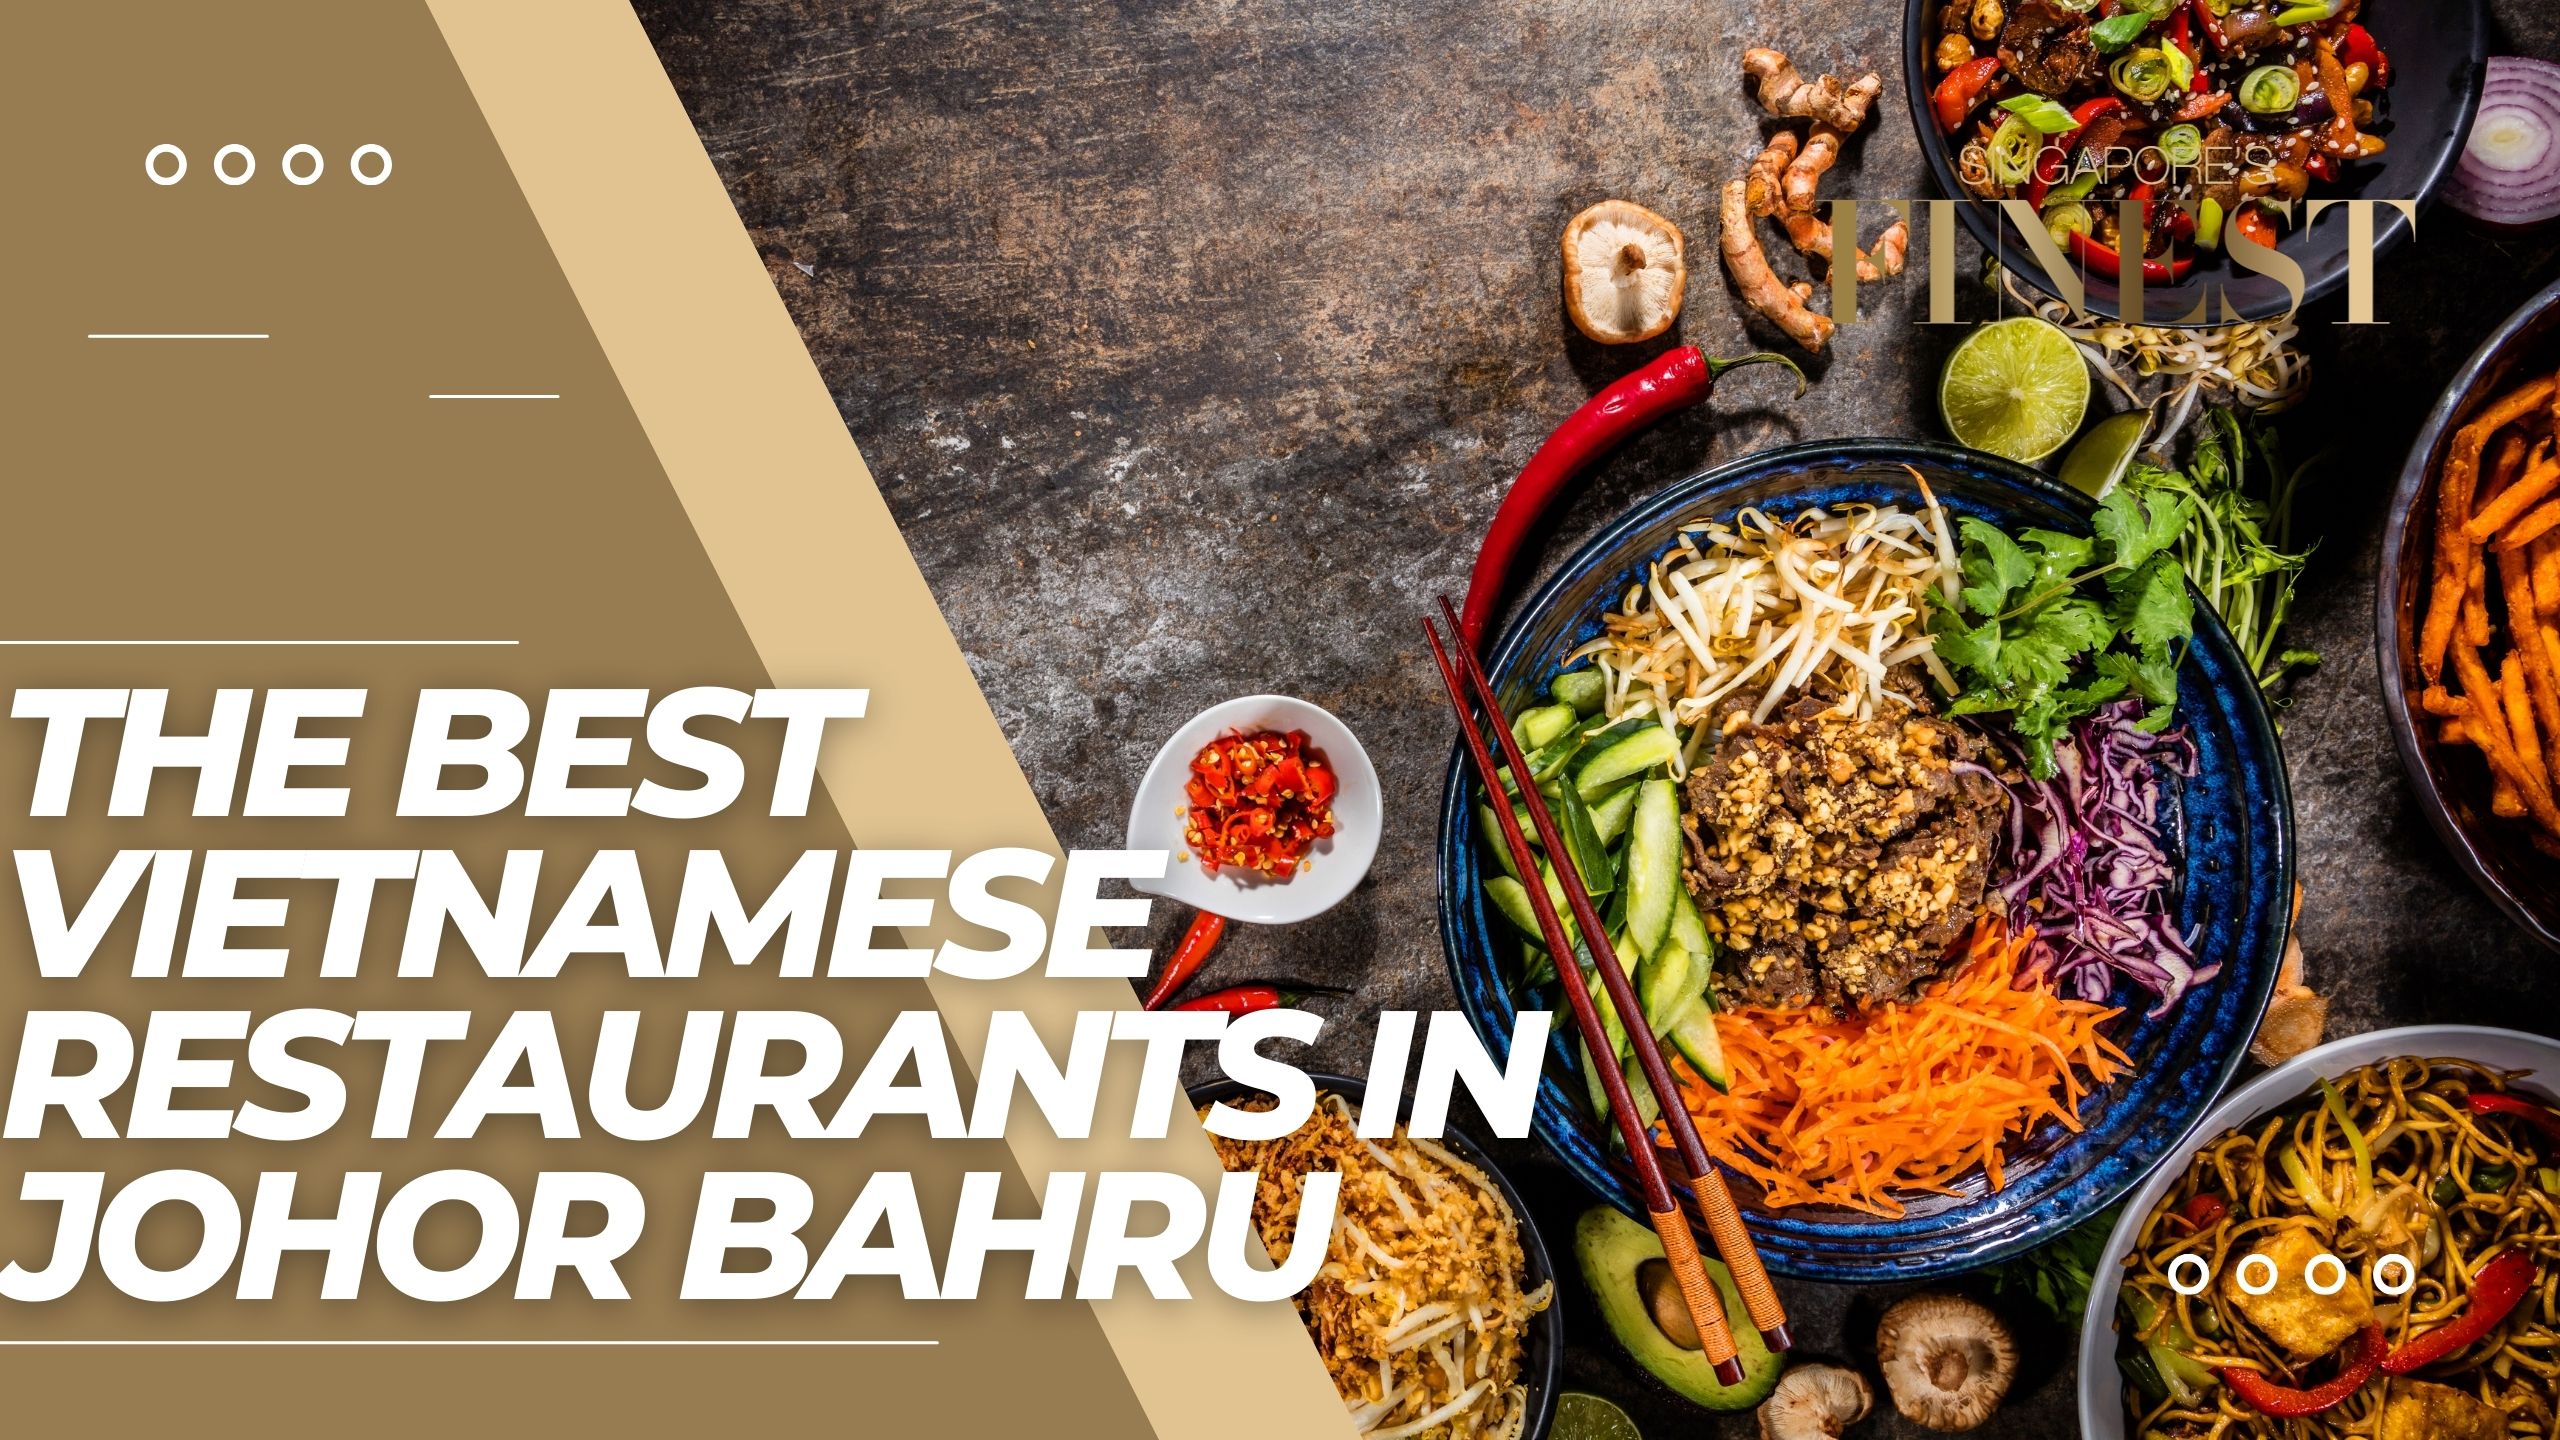 The Finest Vietnamese Restaurants in Johor Bahru